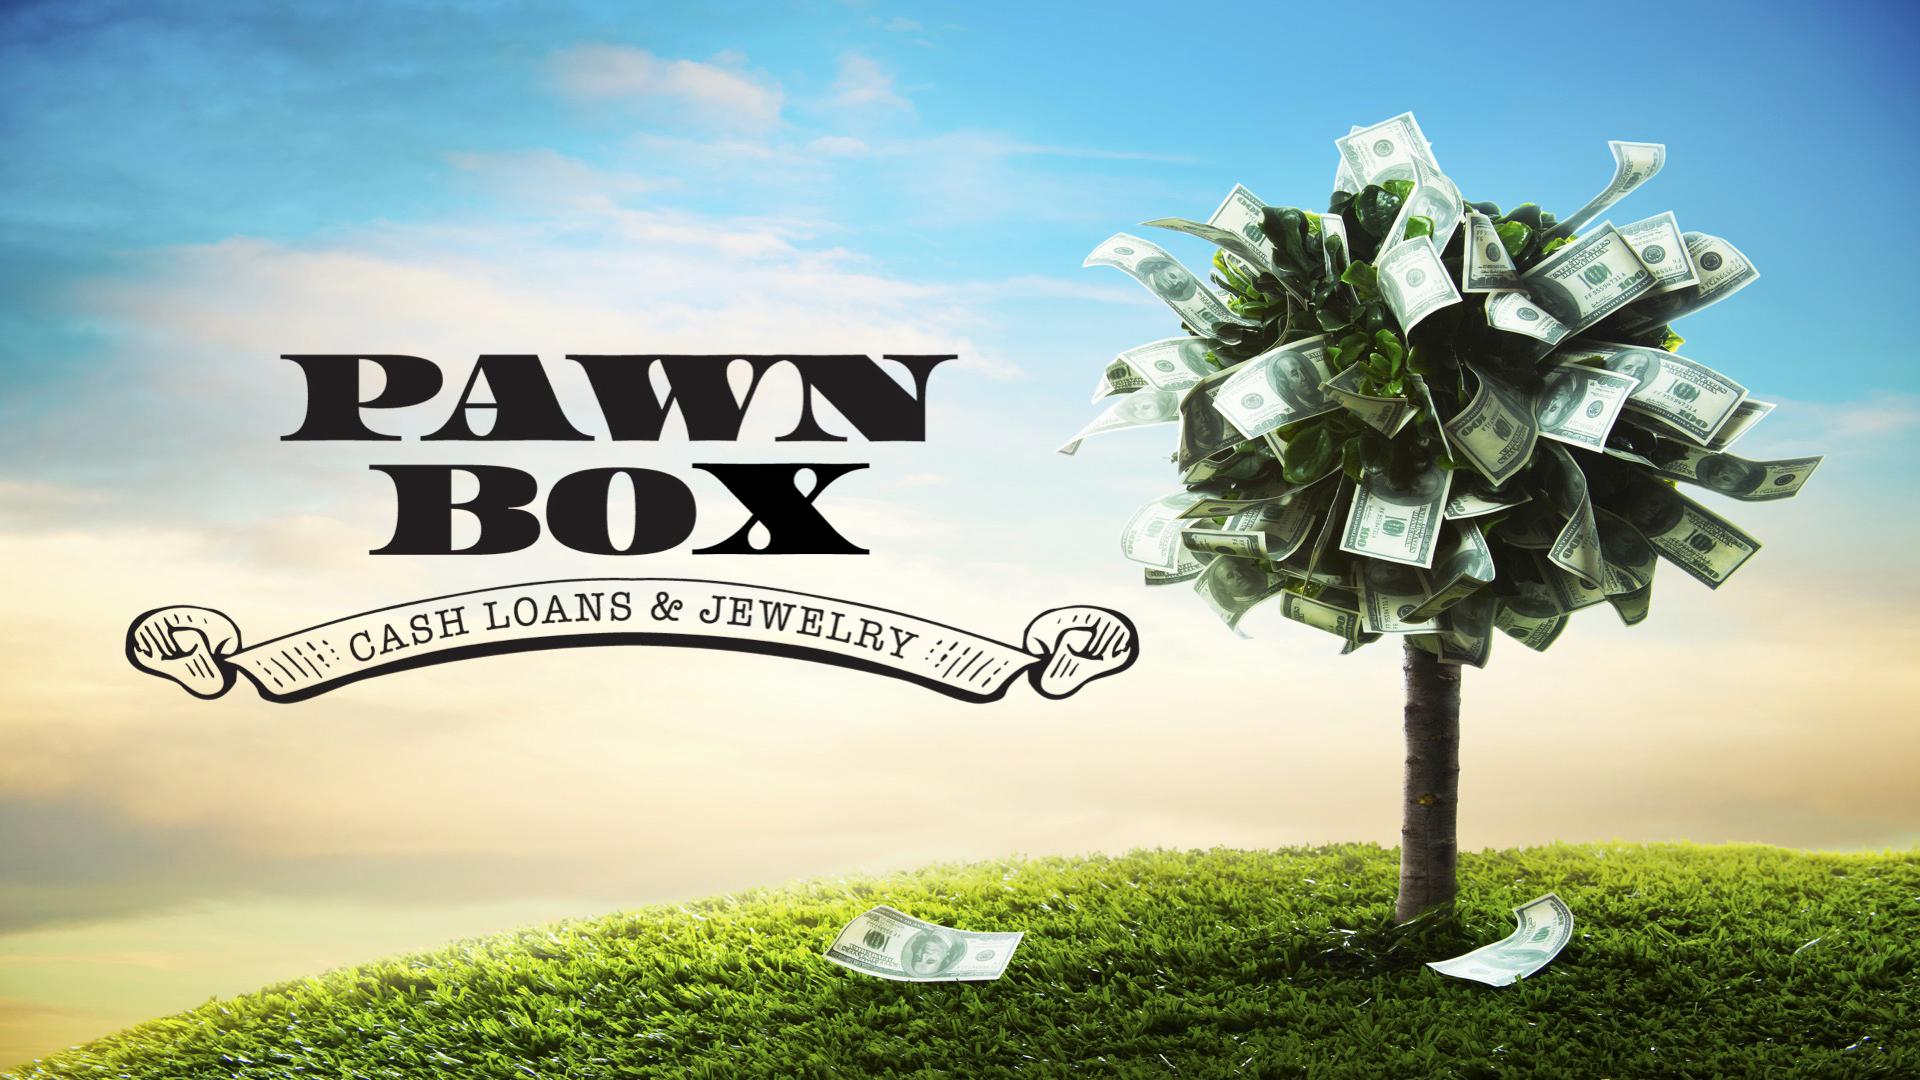 The Pawn Box Photo